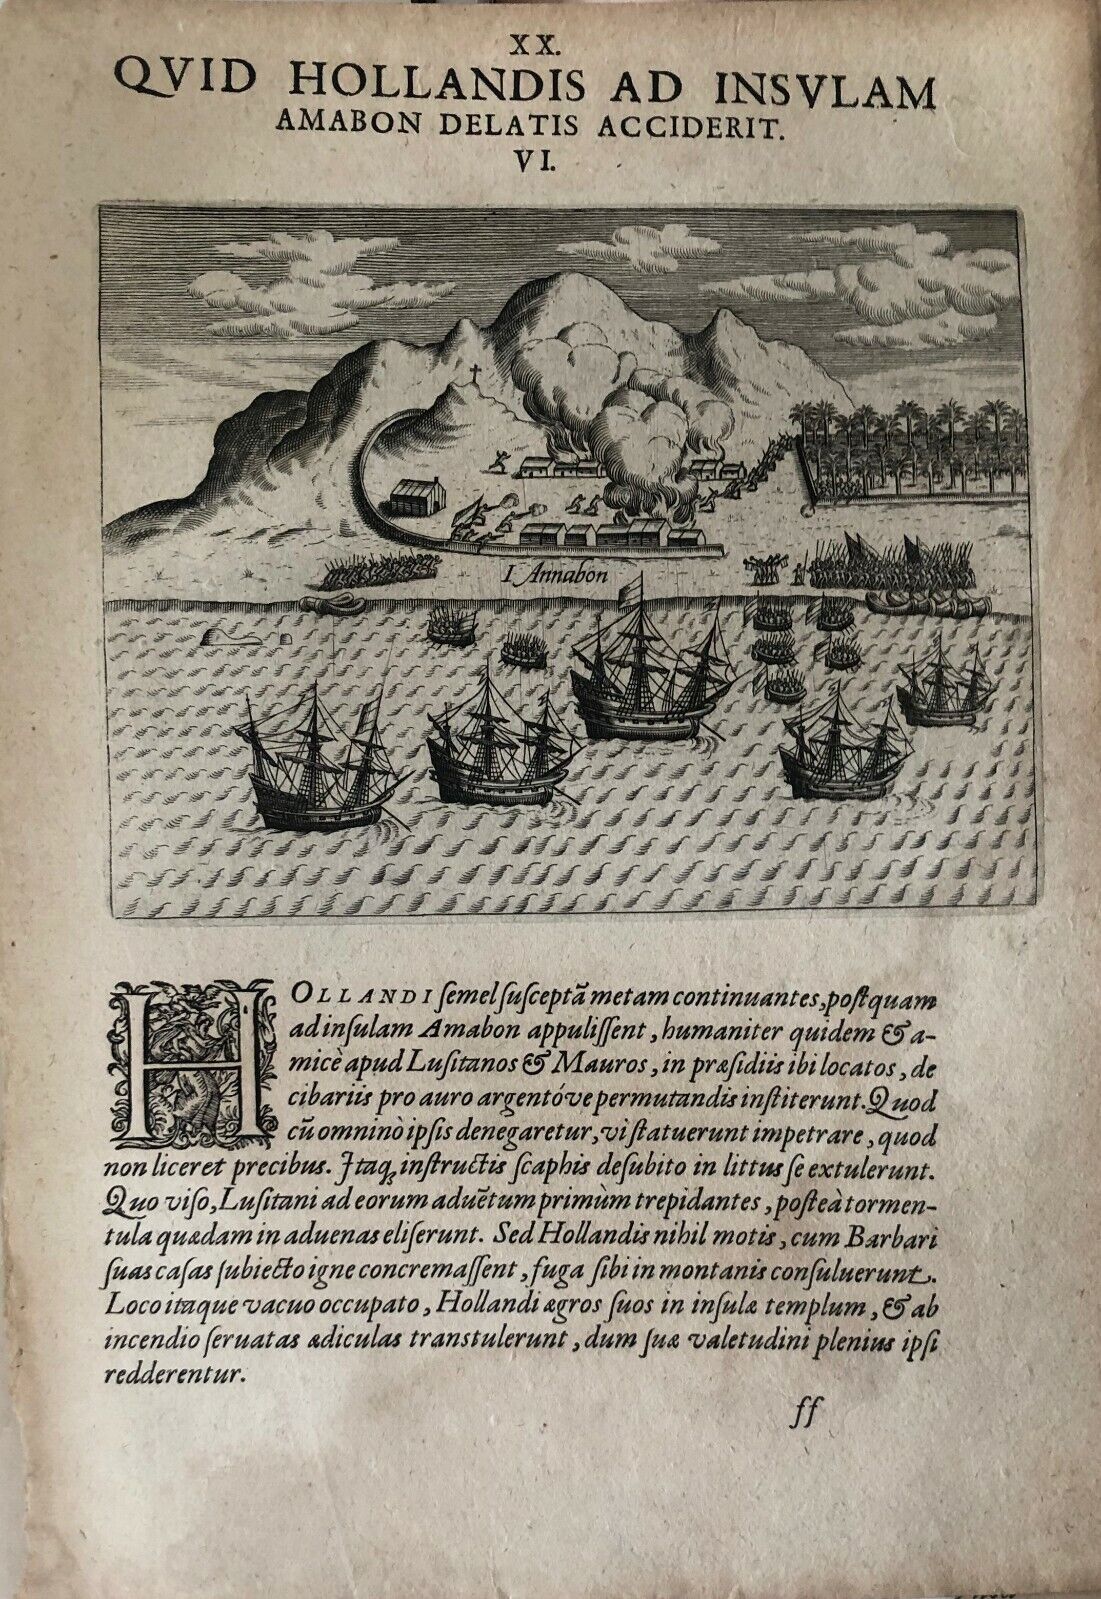 De Bry - "The Dutch reach Annabon (Pagalu)" Equatorial Guinea 1601 - Engraving